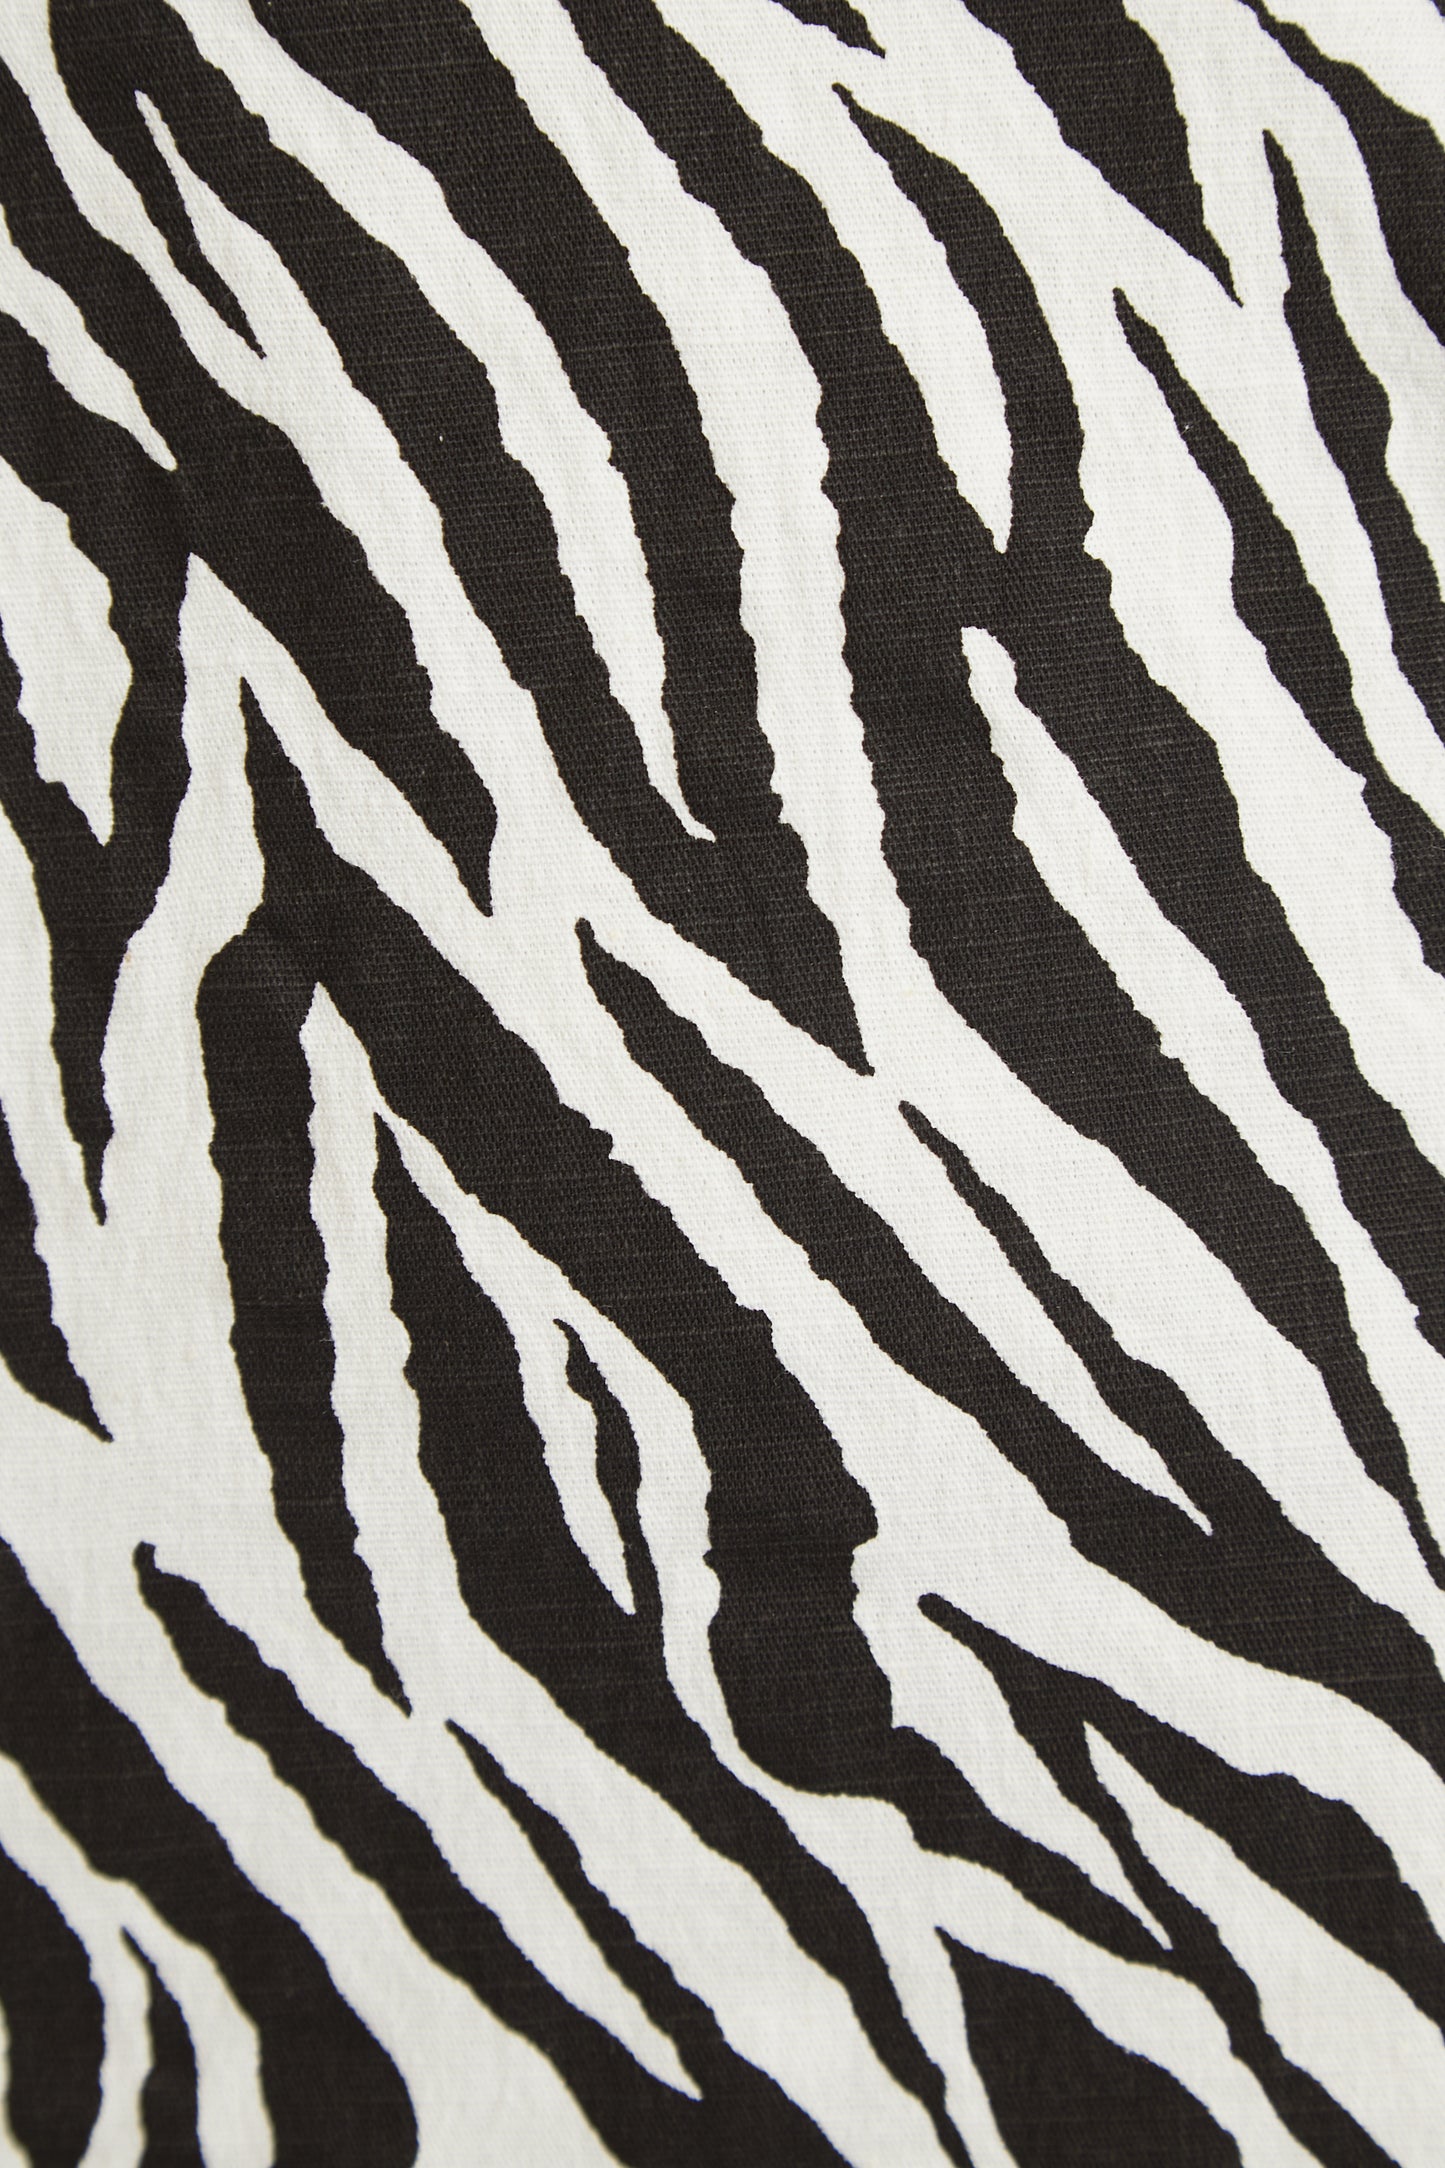 Anala Zebra Print Long Sleeve Mini Dress